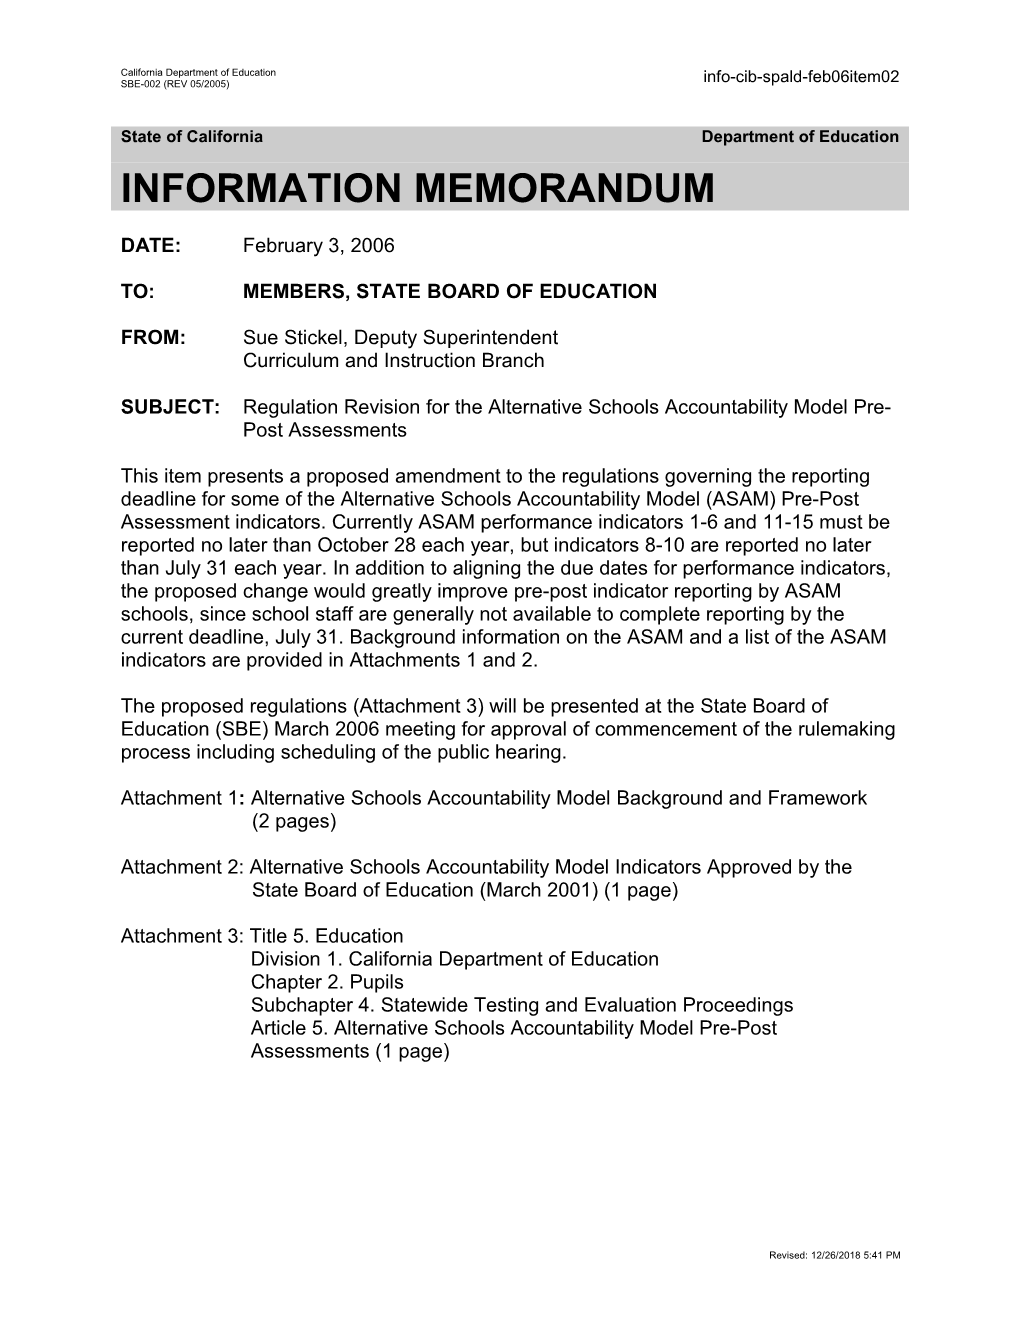 February 2006 SPALD Item 02 - Information Memorandum (CA State Board of Education)